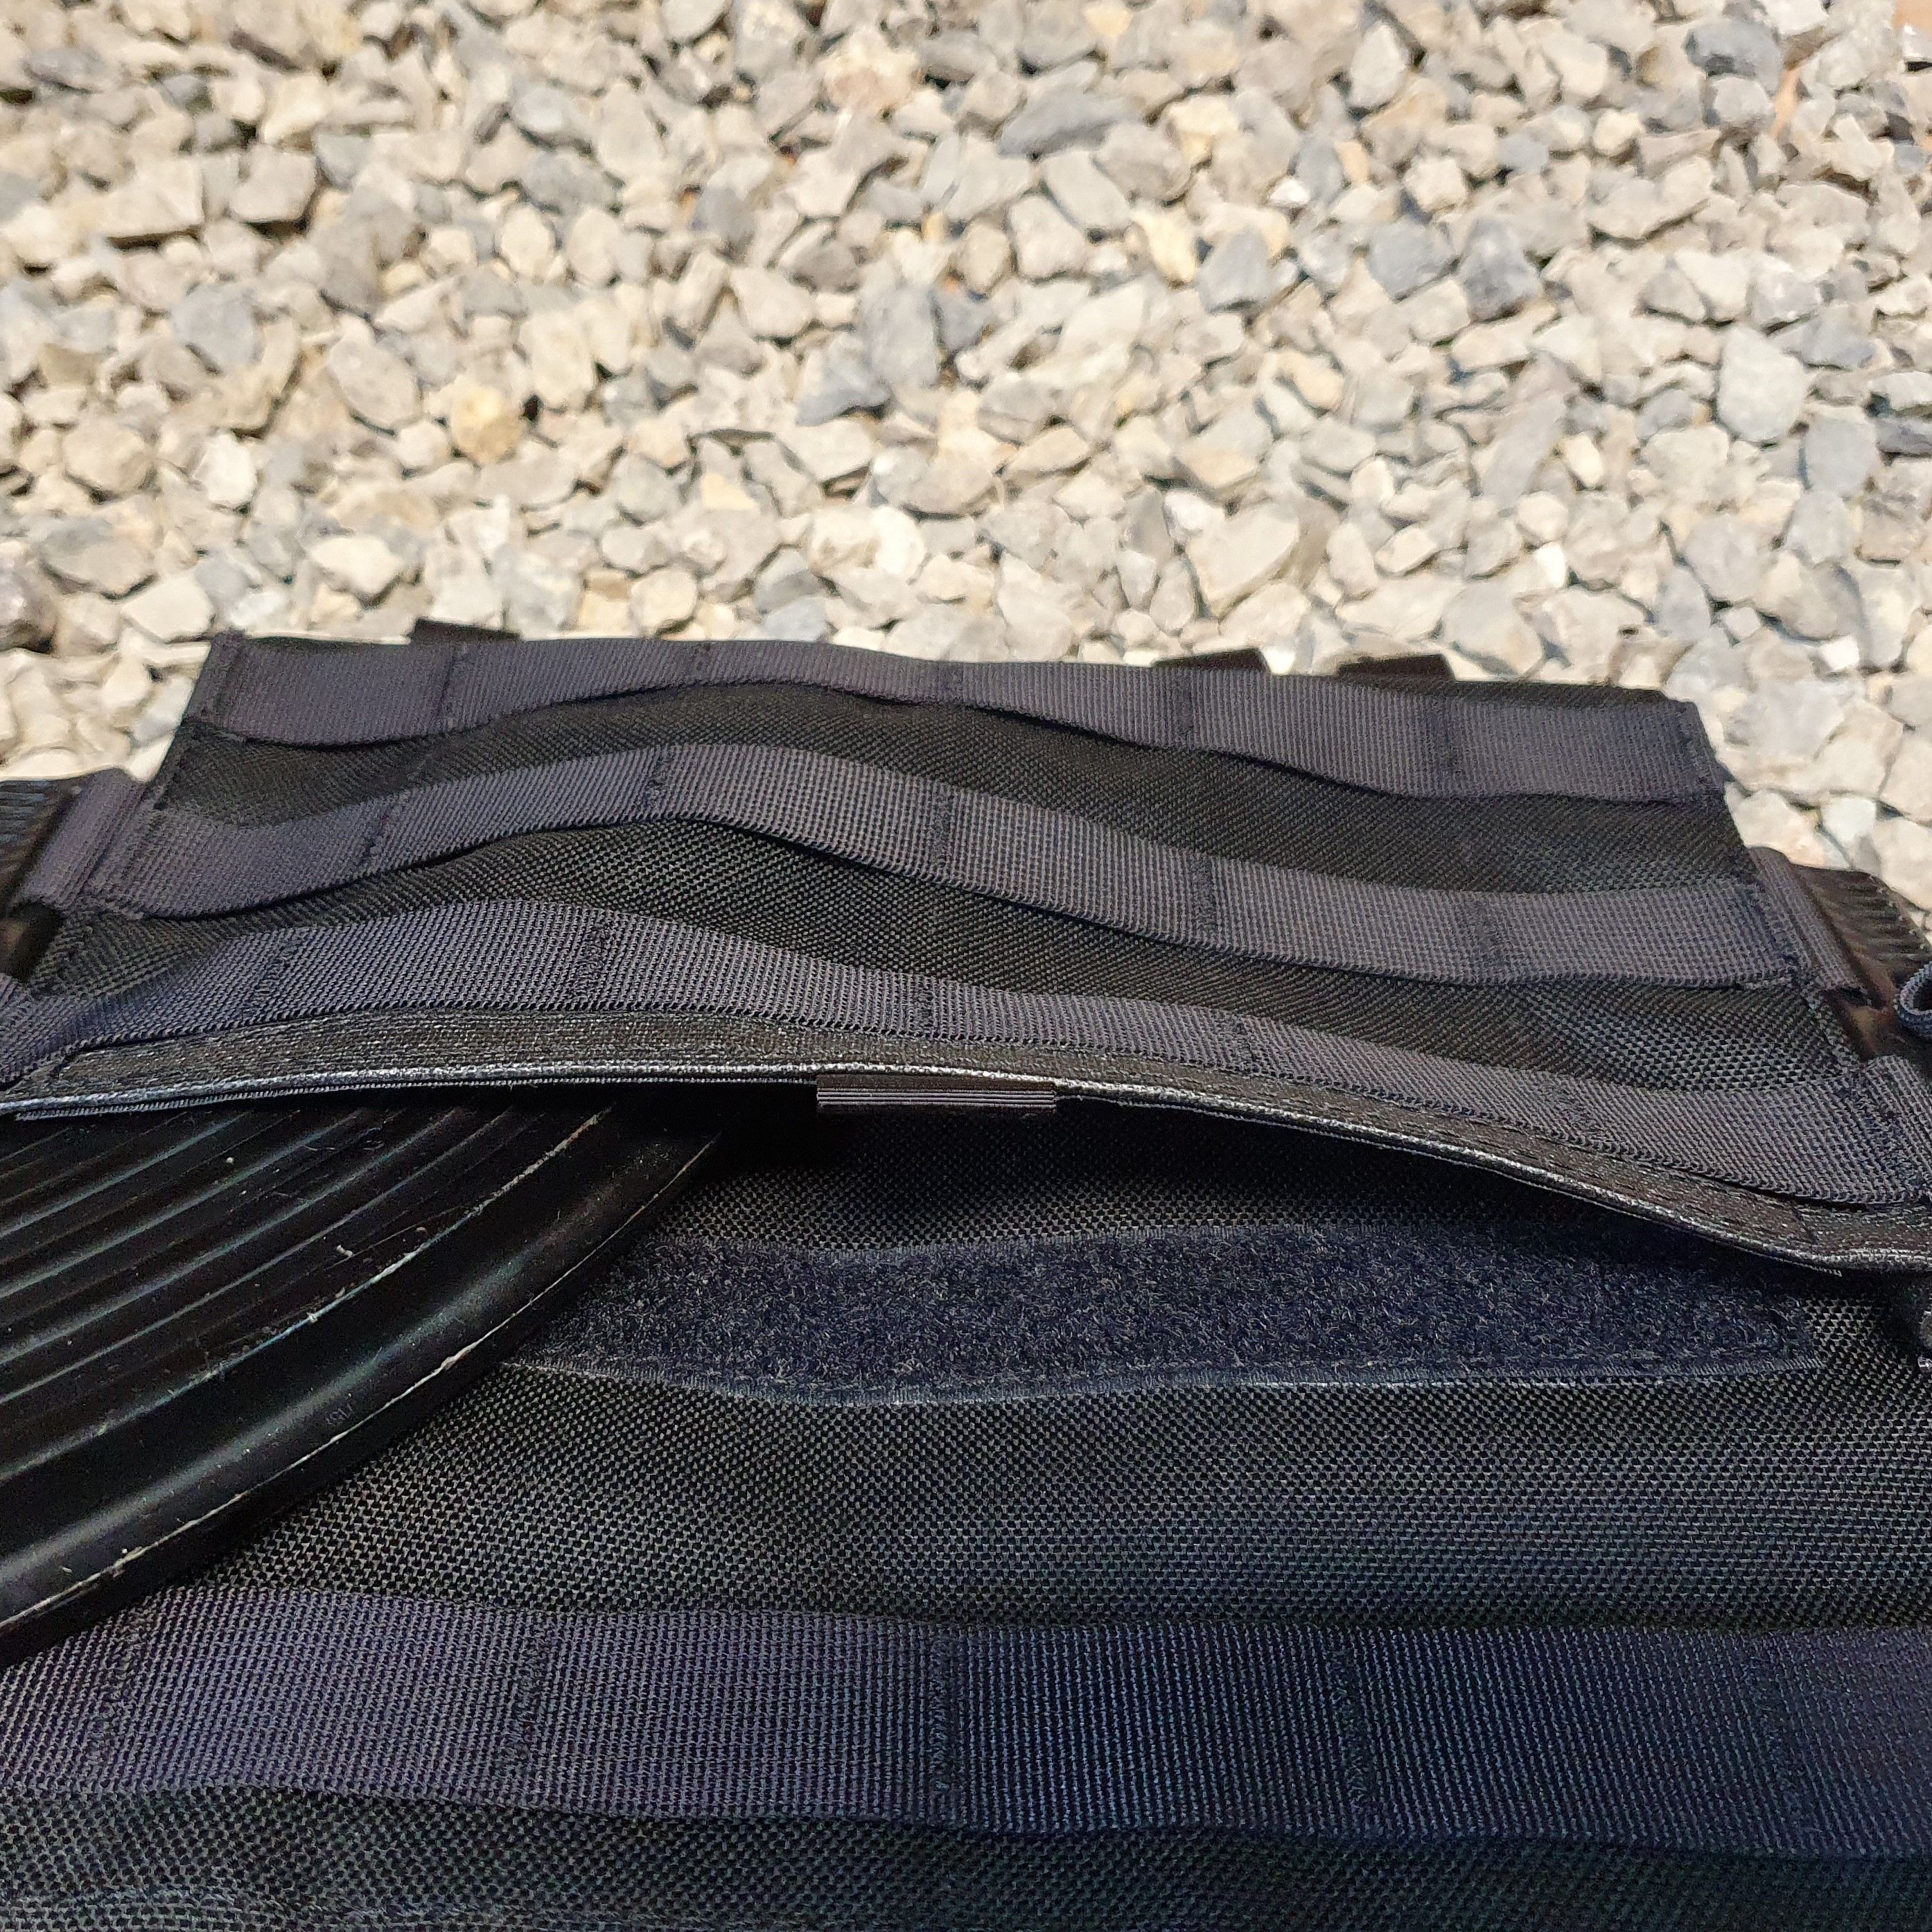 Kangaroo pocket with hook and loop tape closure with 6x3 MOLLE webbings